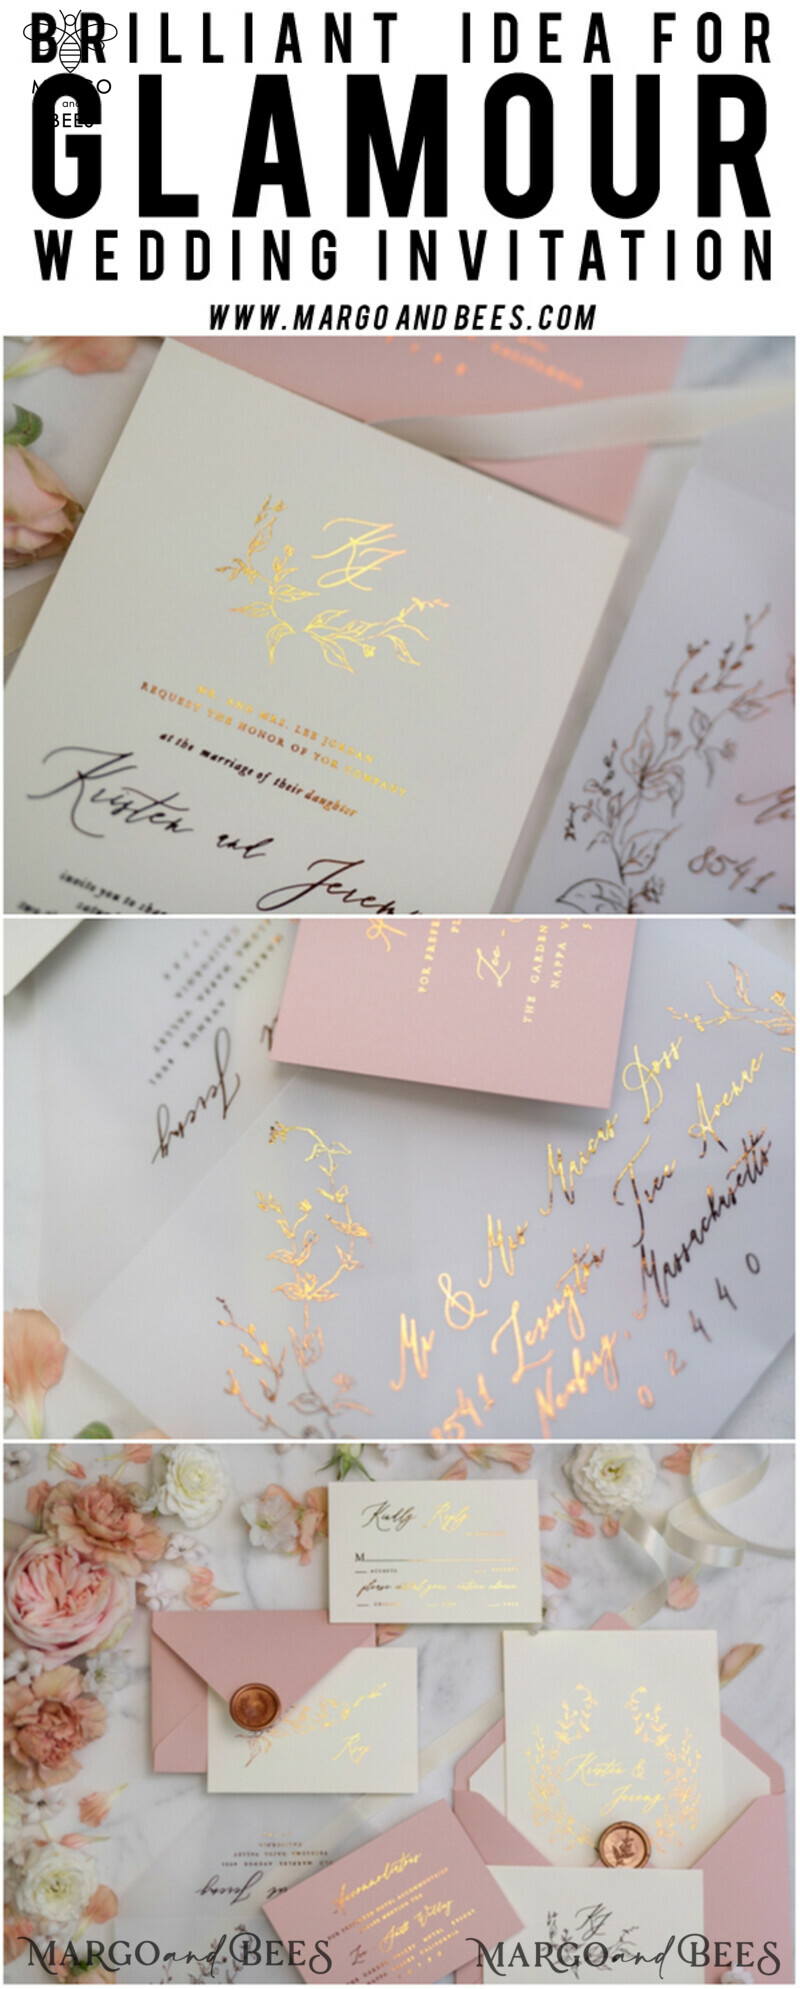 Bespoke Vellum Wedding Invitation Suite: Romantic Blush Pink and Glamour Gold Foil for an Elegant Golden Affair-39